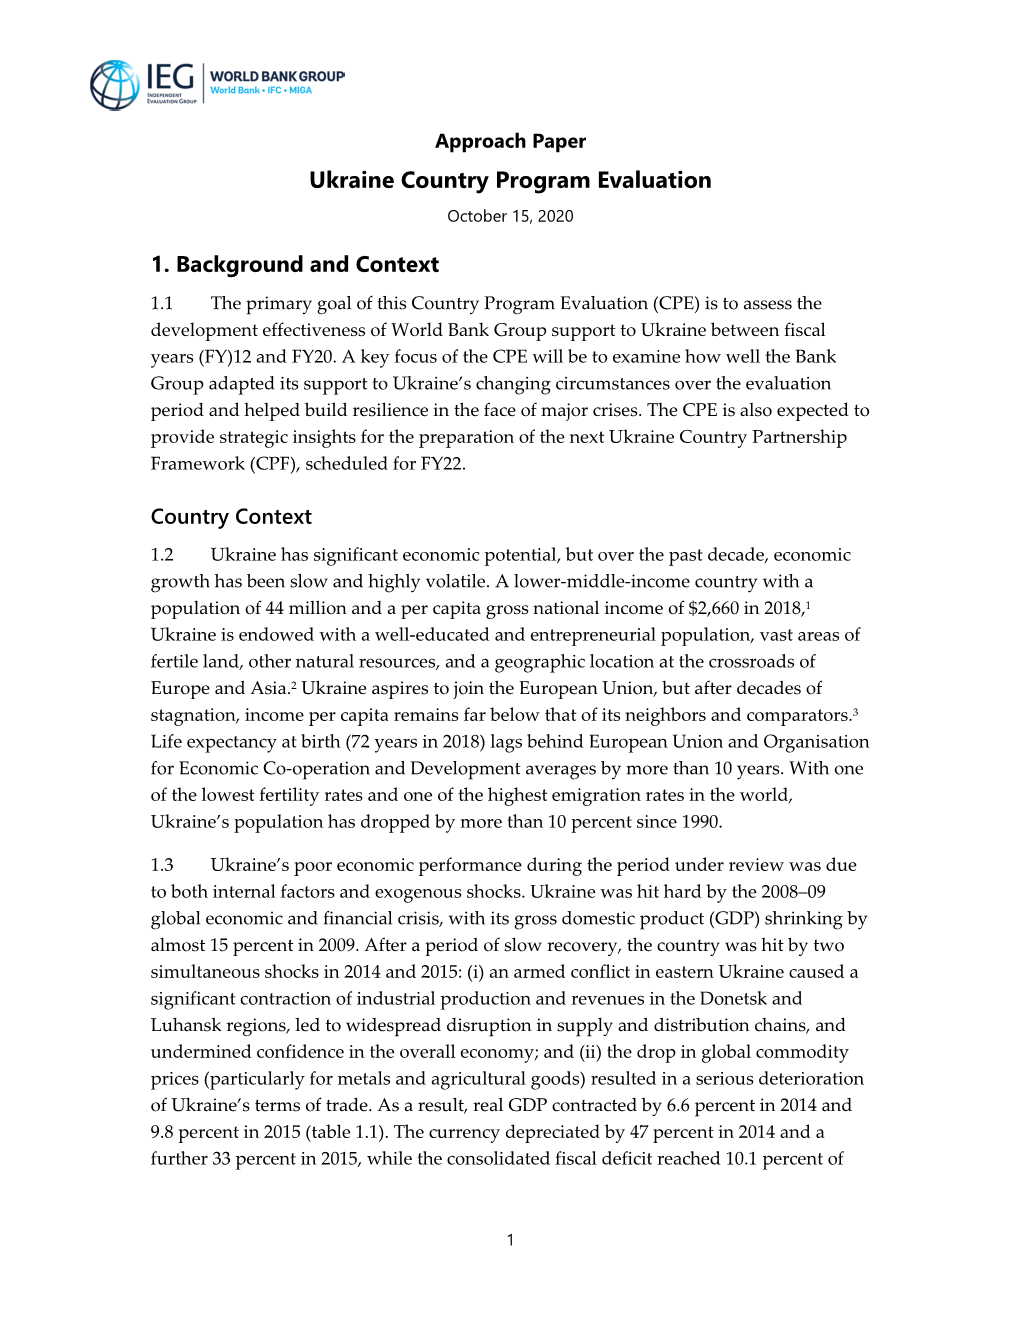 Ukraine Country Program Evaluation October 15, 2020